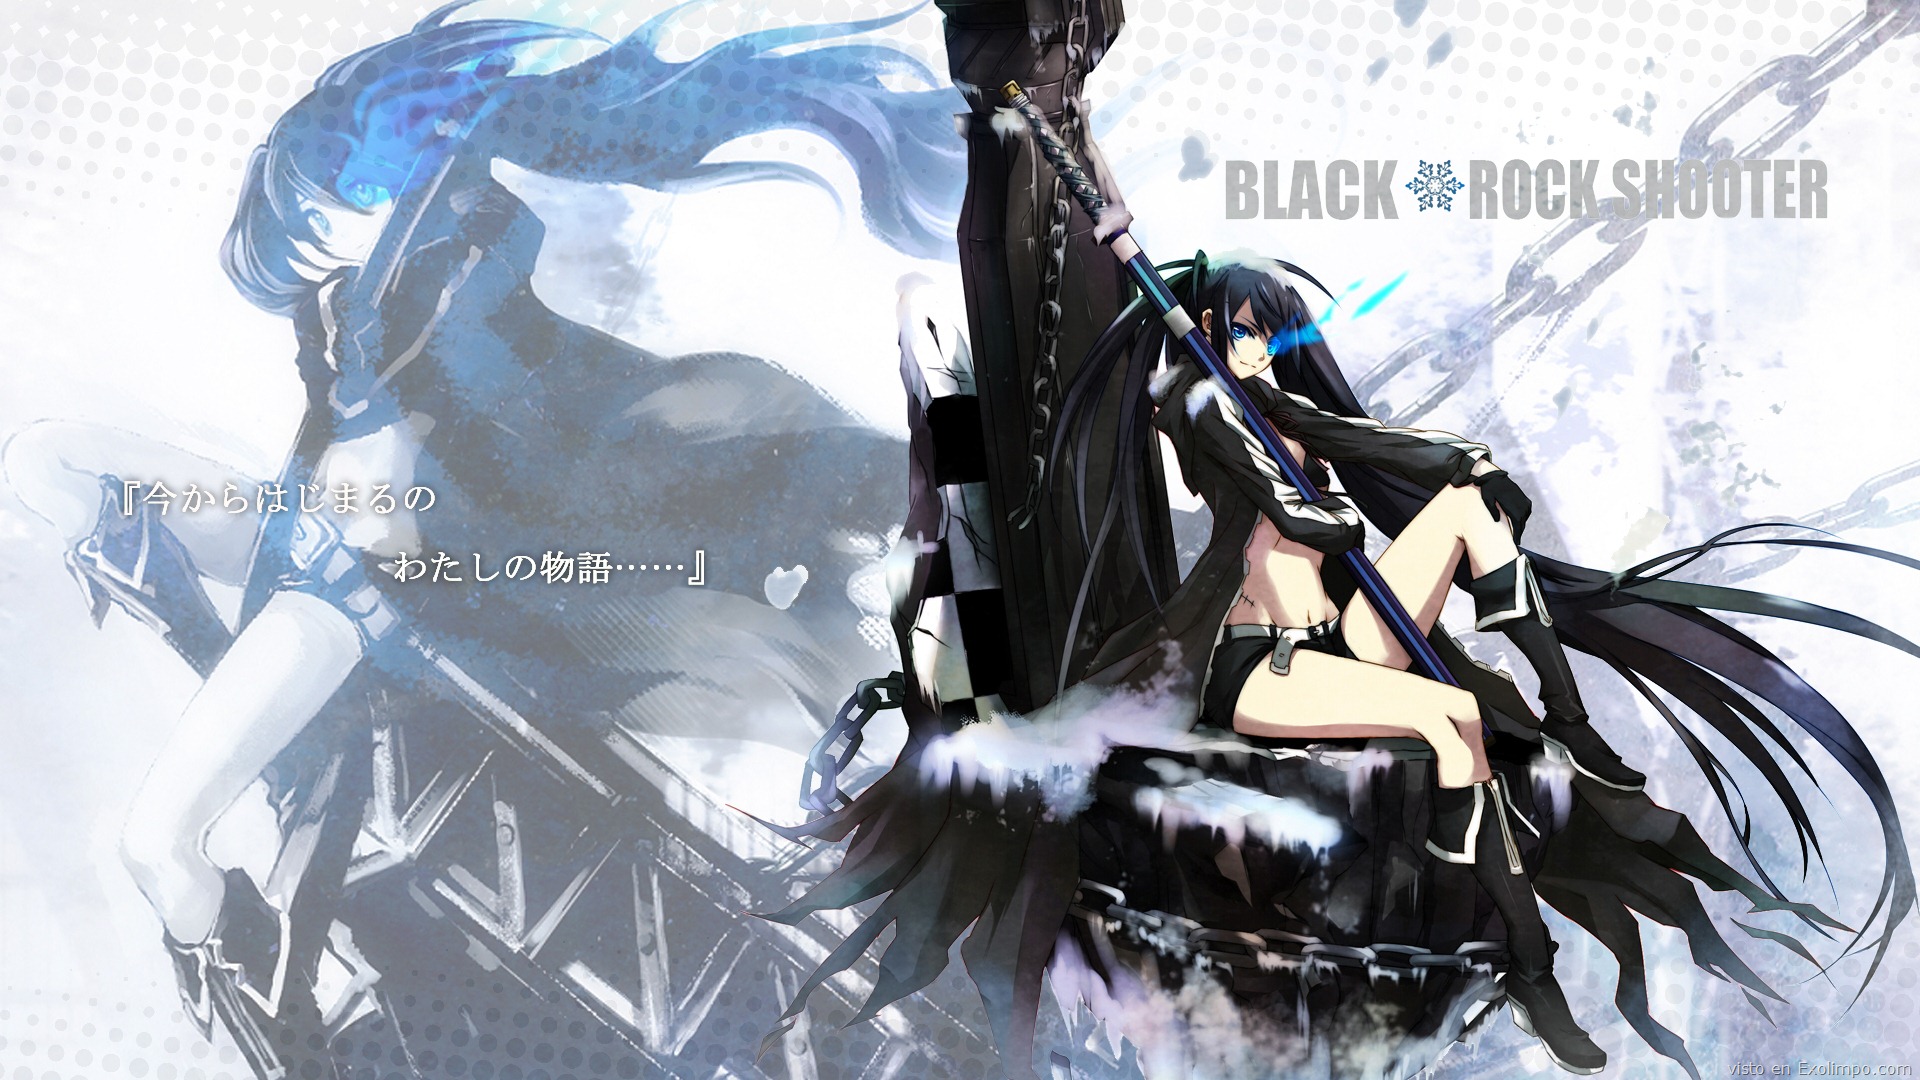 Black Rock Shooter Vocaloid Image